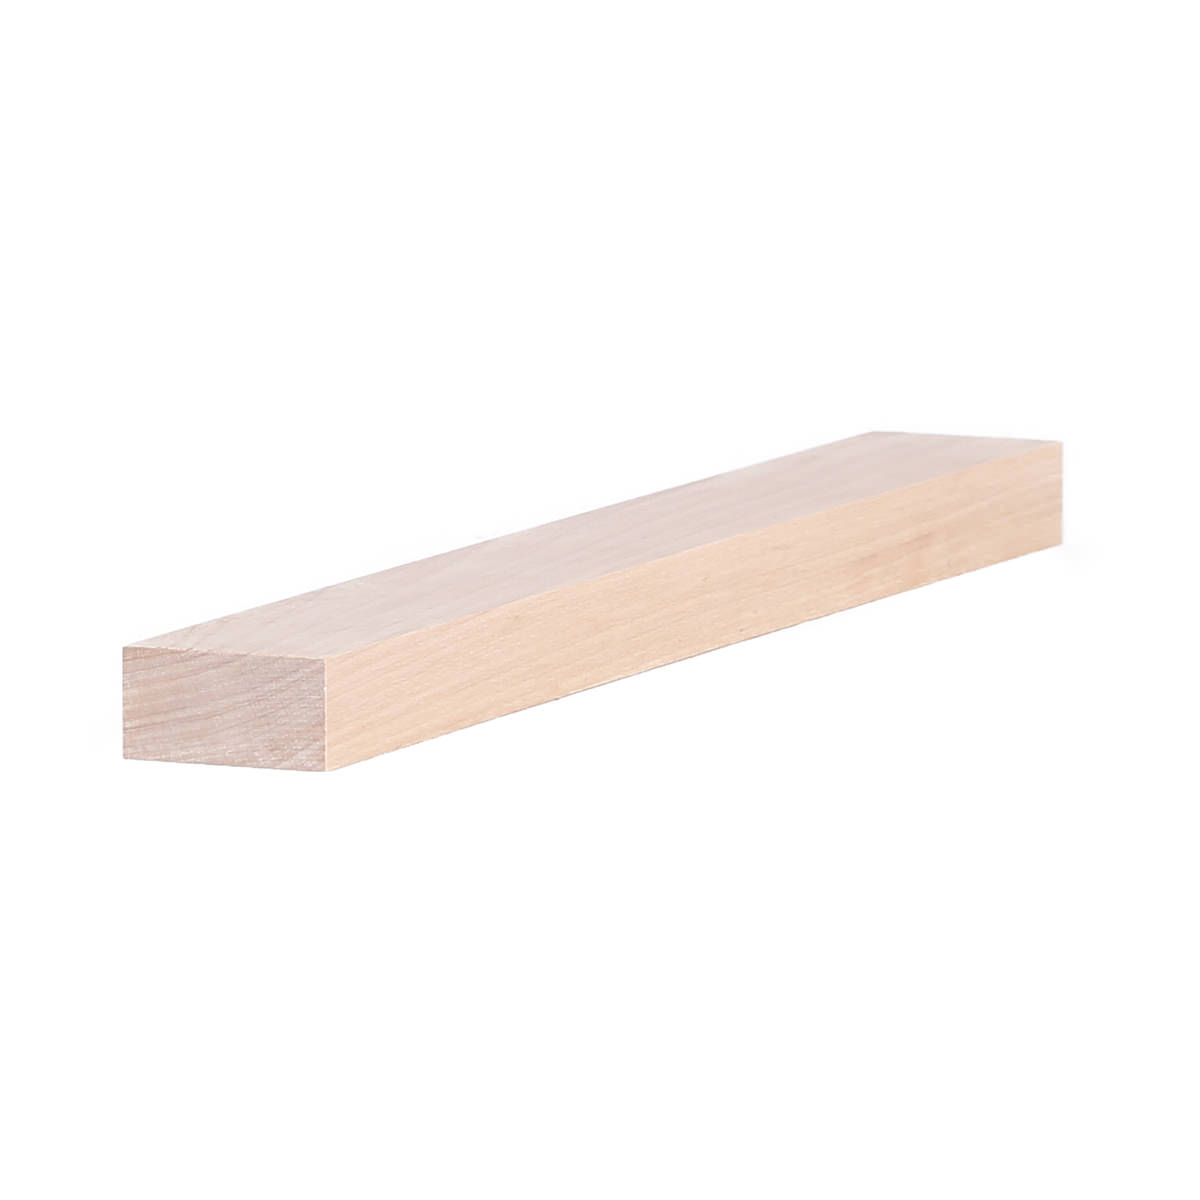 1x2 (3/4" x 11/2") Birch S4S Lumber, Boards, & Flat Stock